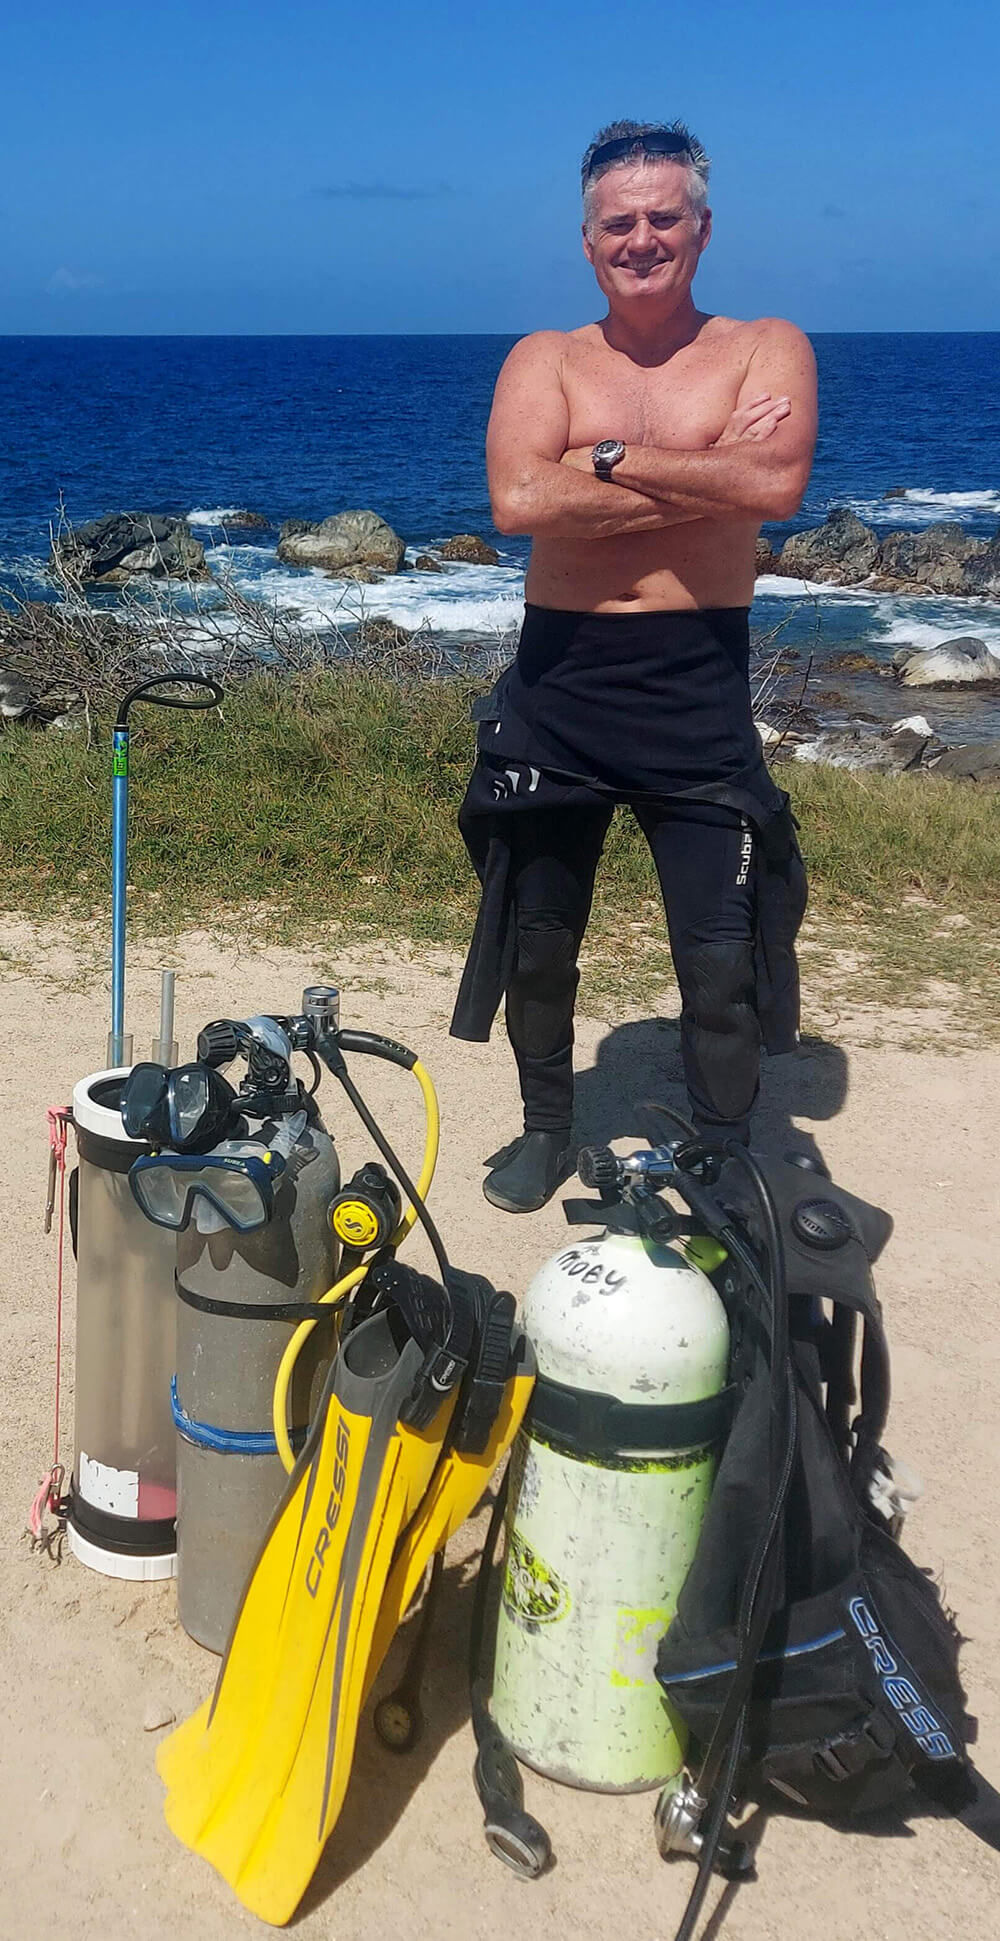 Dick de Bruin and his scuba diving gear